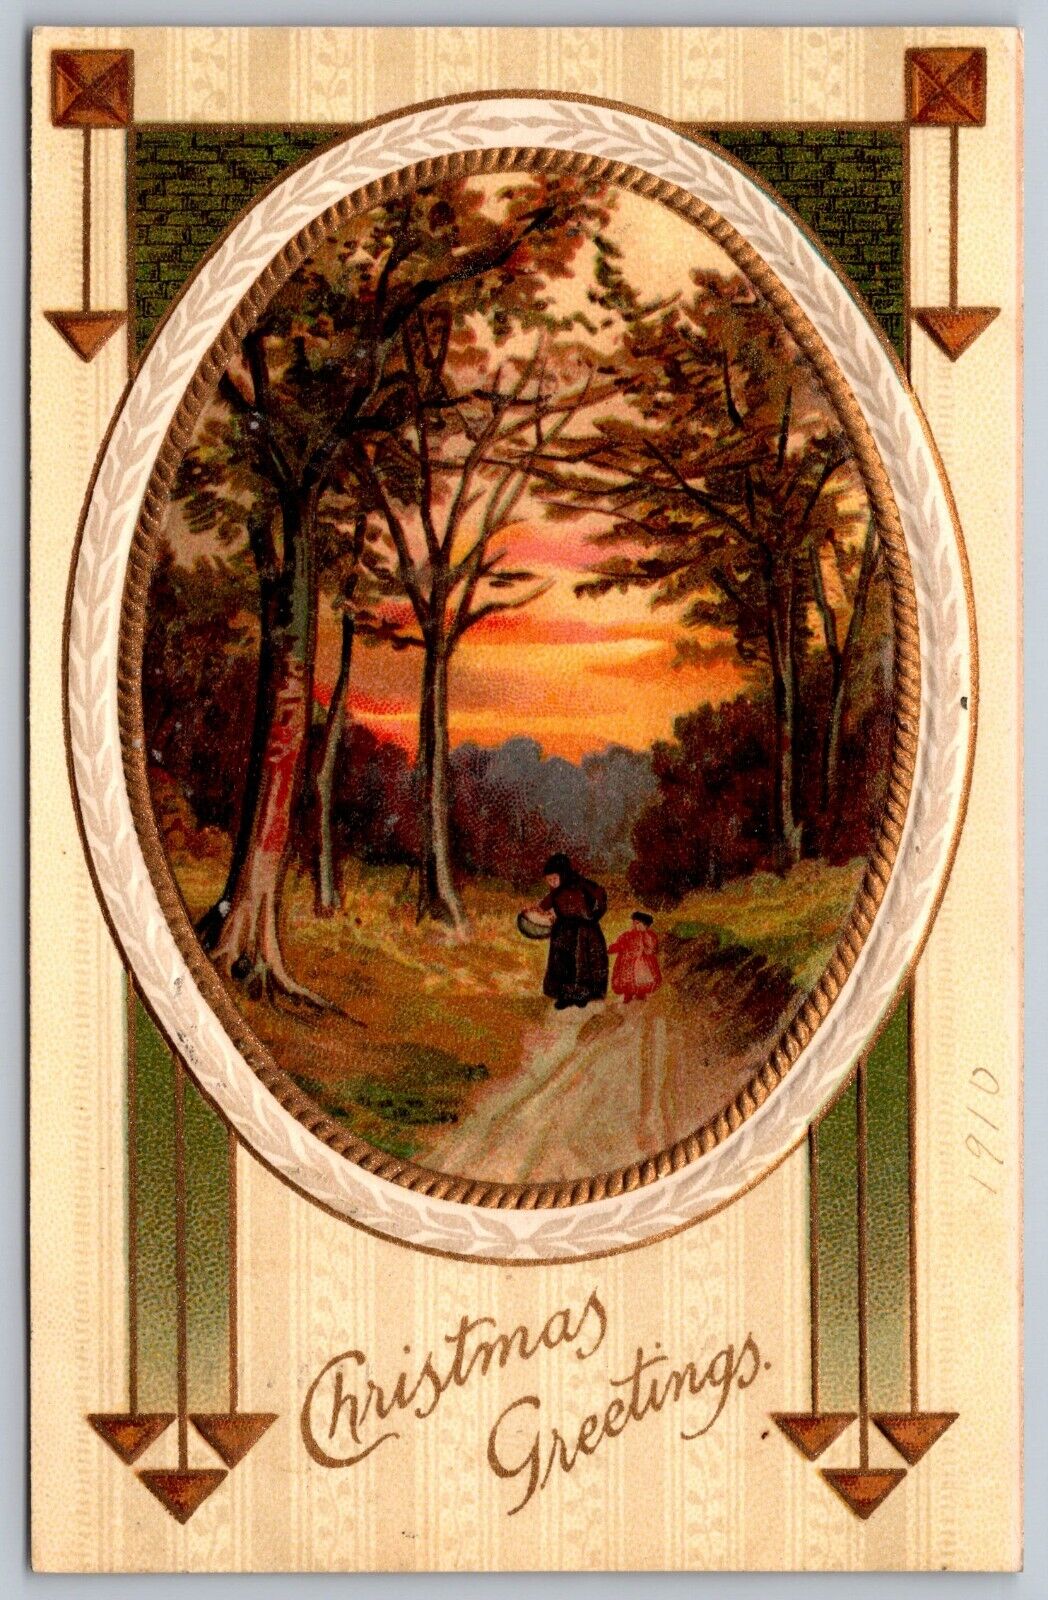 1910 Vintage Christmas Greetings Embossed Postcard with Woman Child Walking